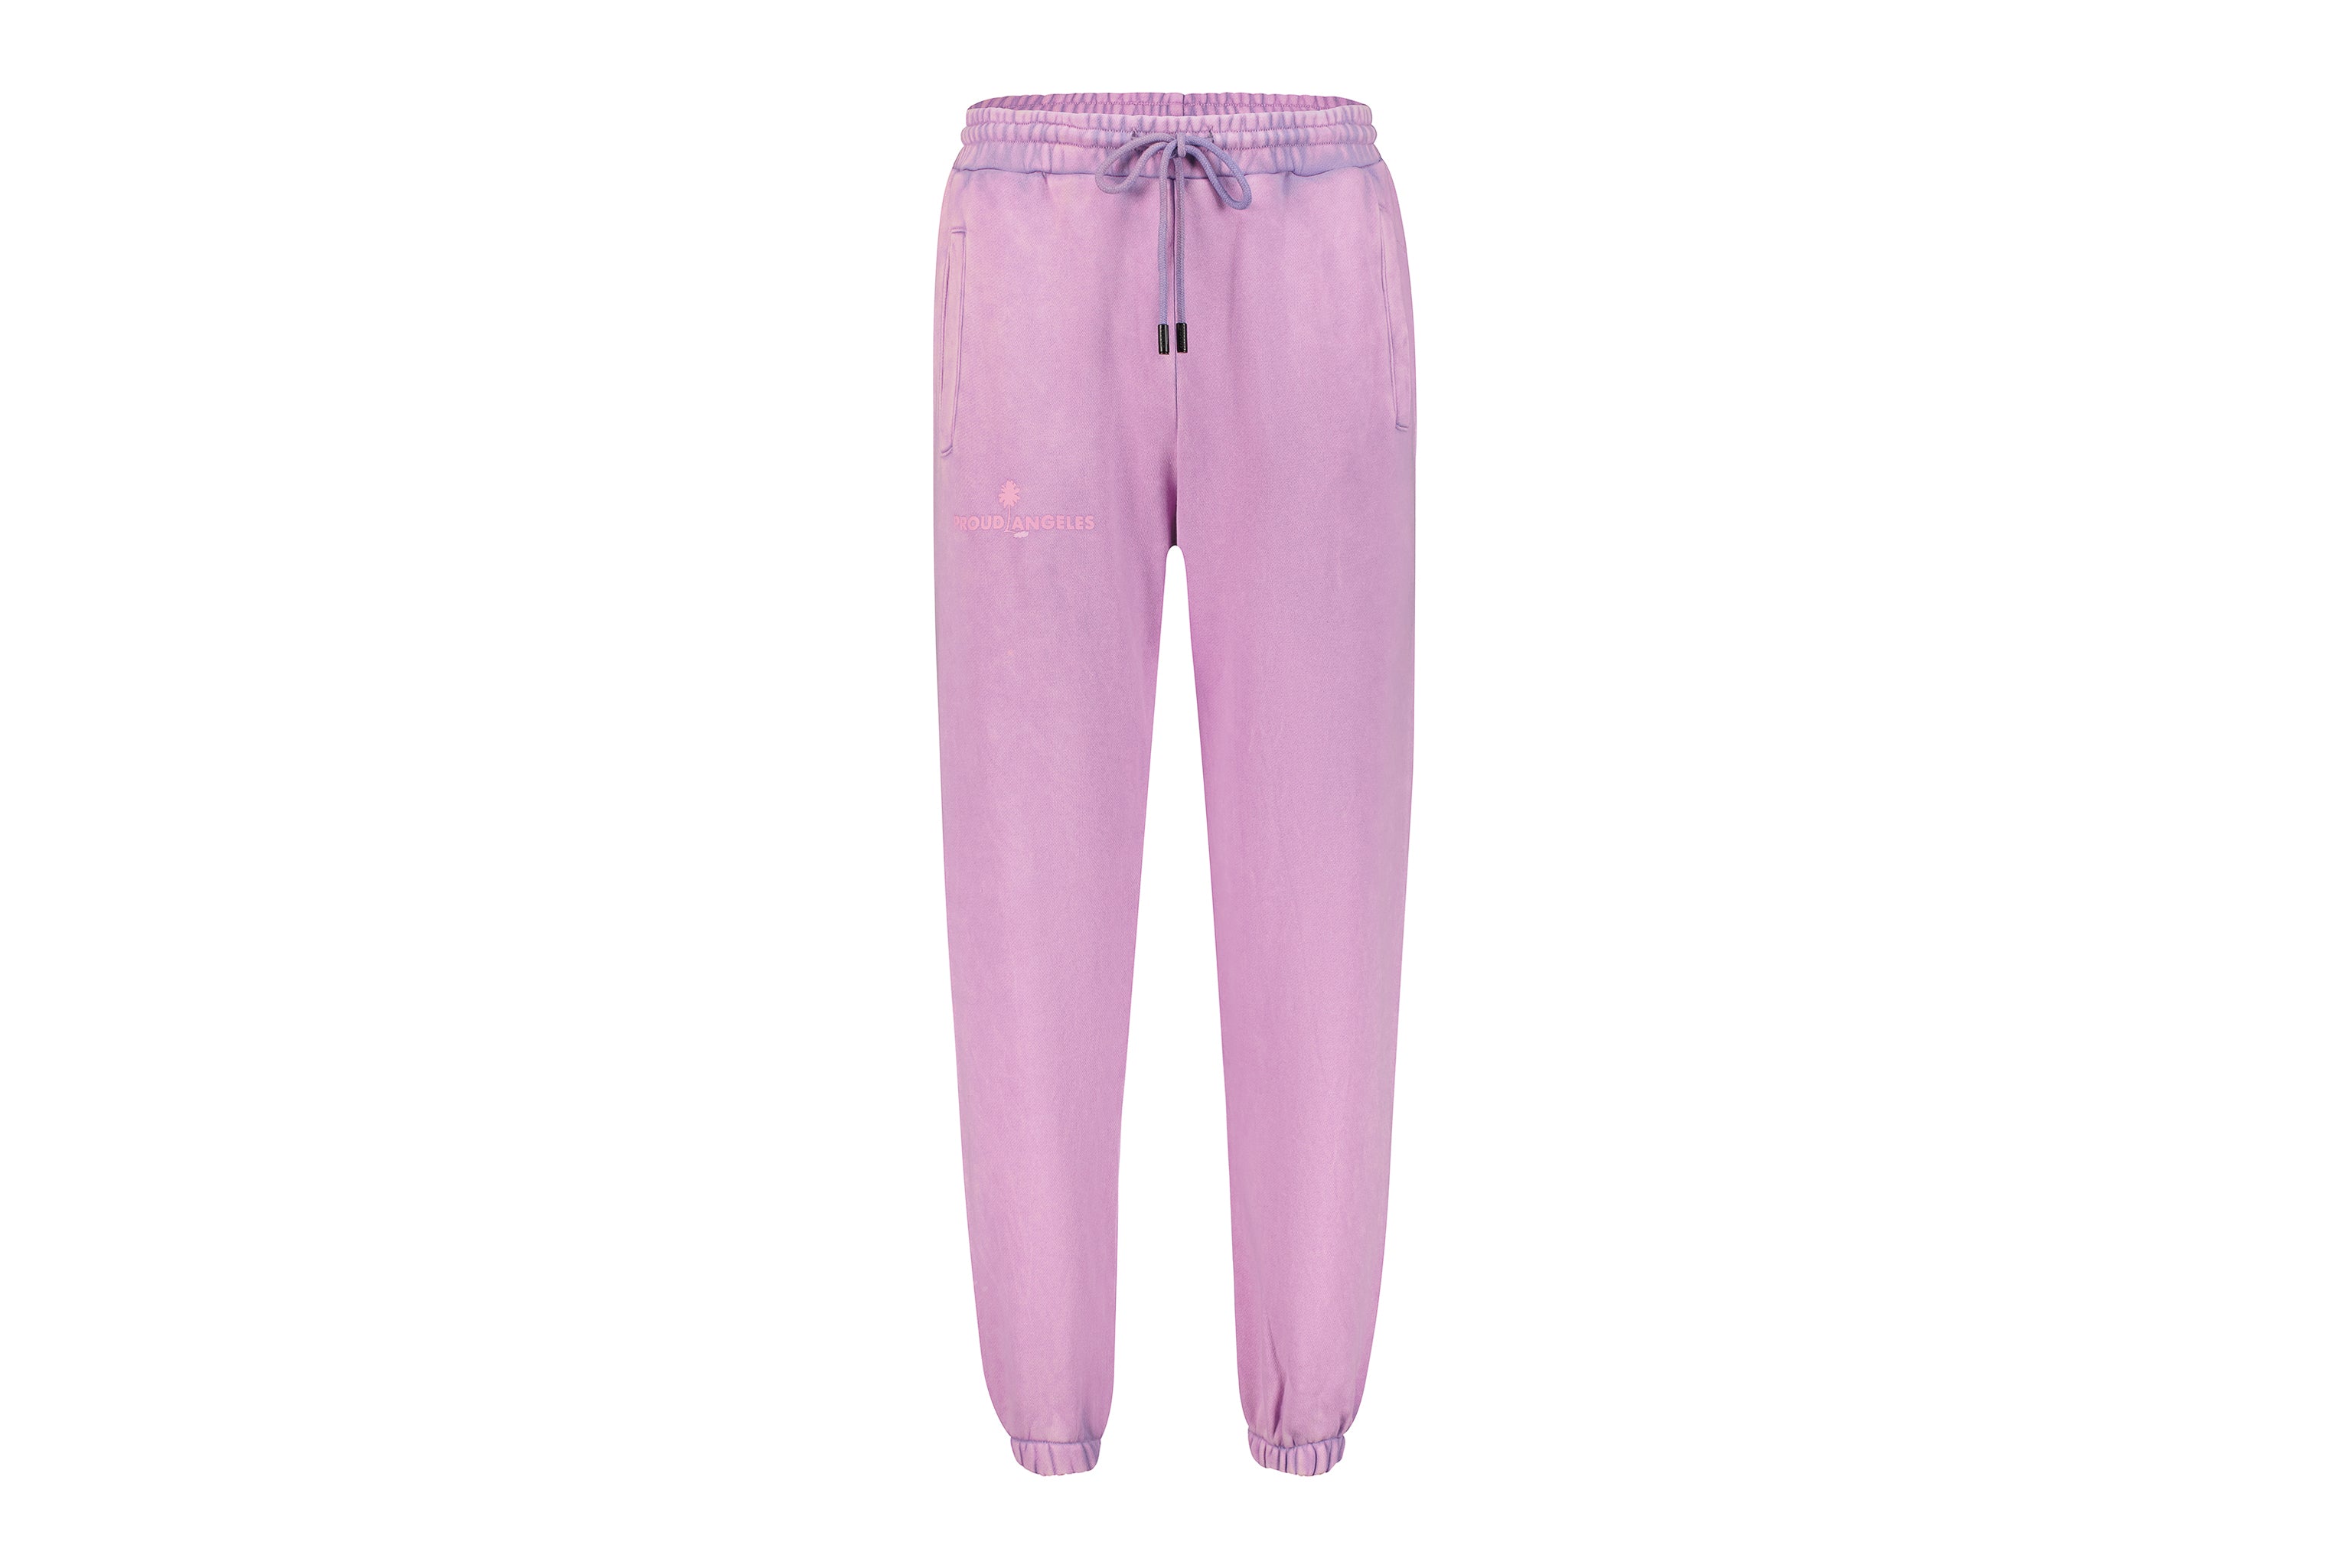 Cotton Candy Pink Sweatpants